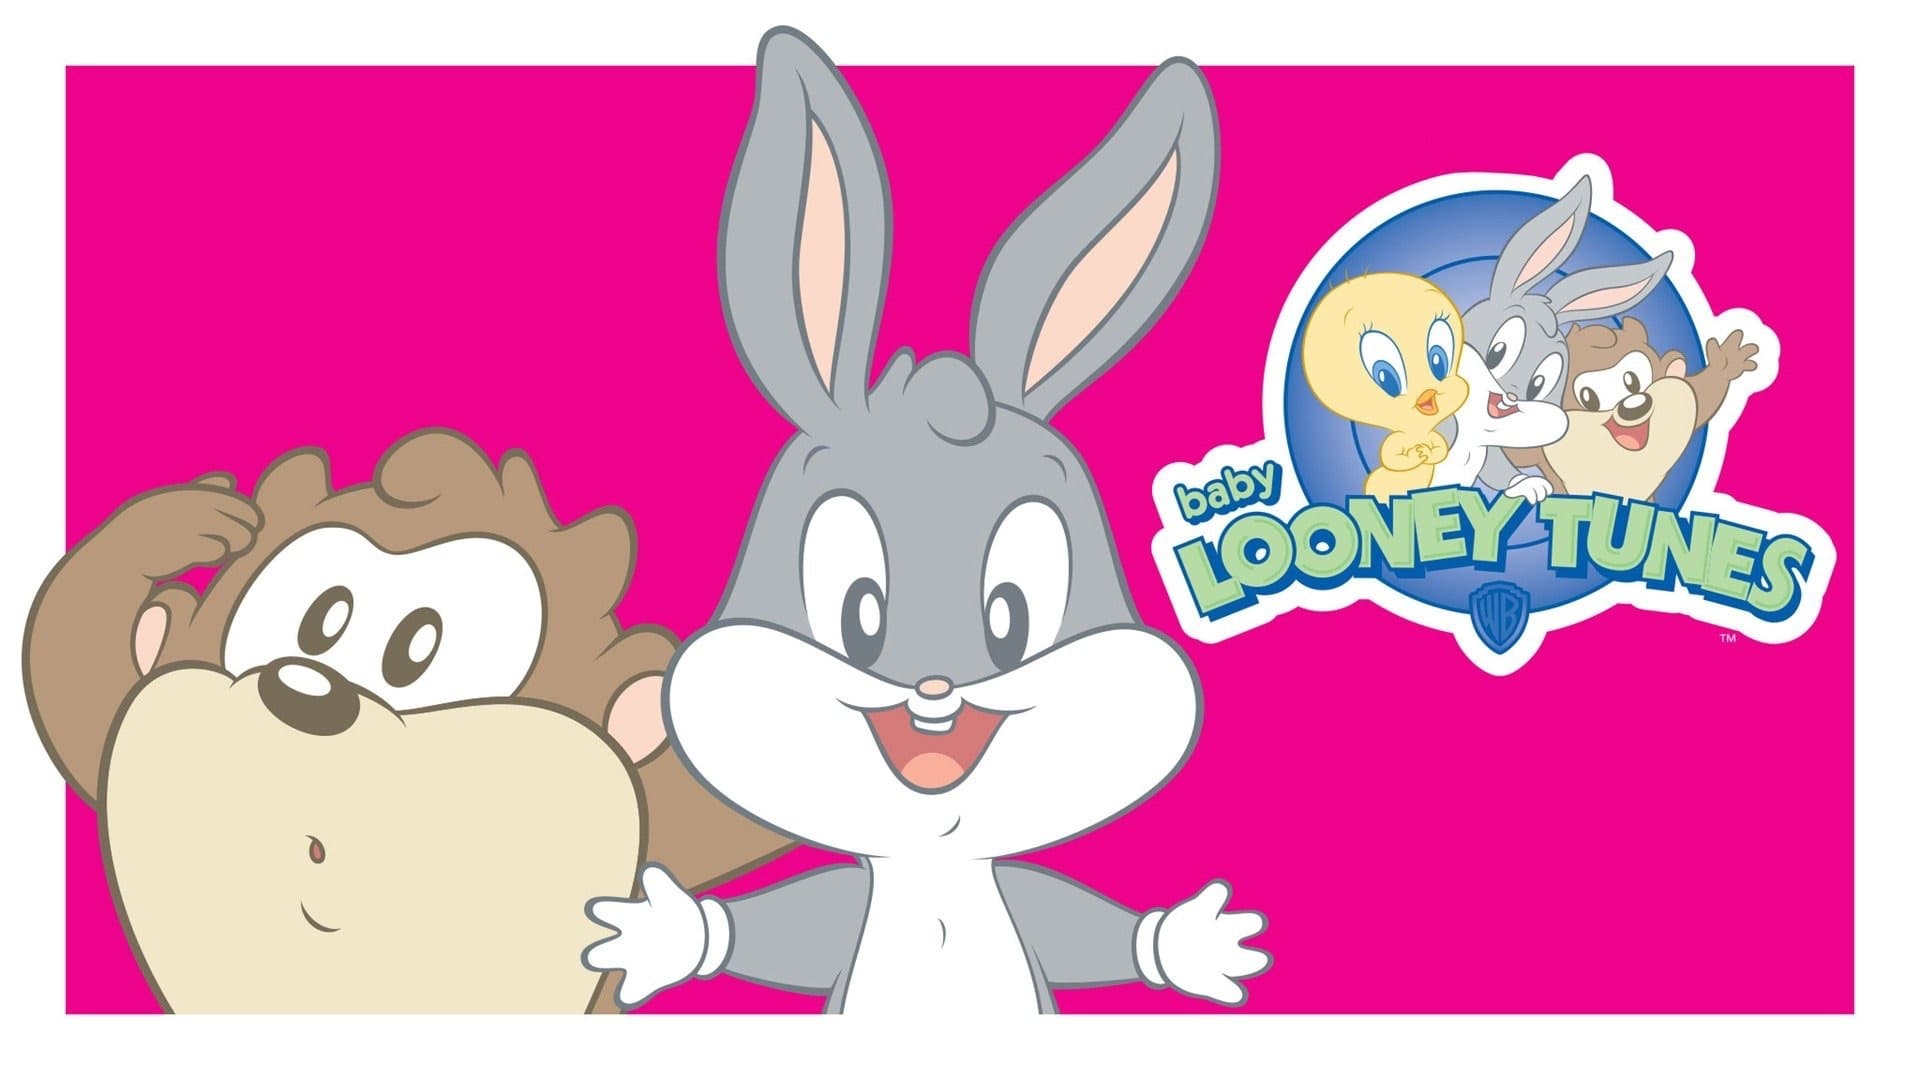 Baby Looney Tunes - Season 1